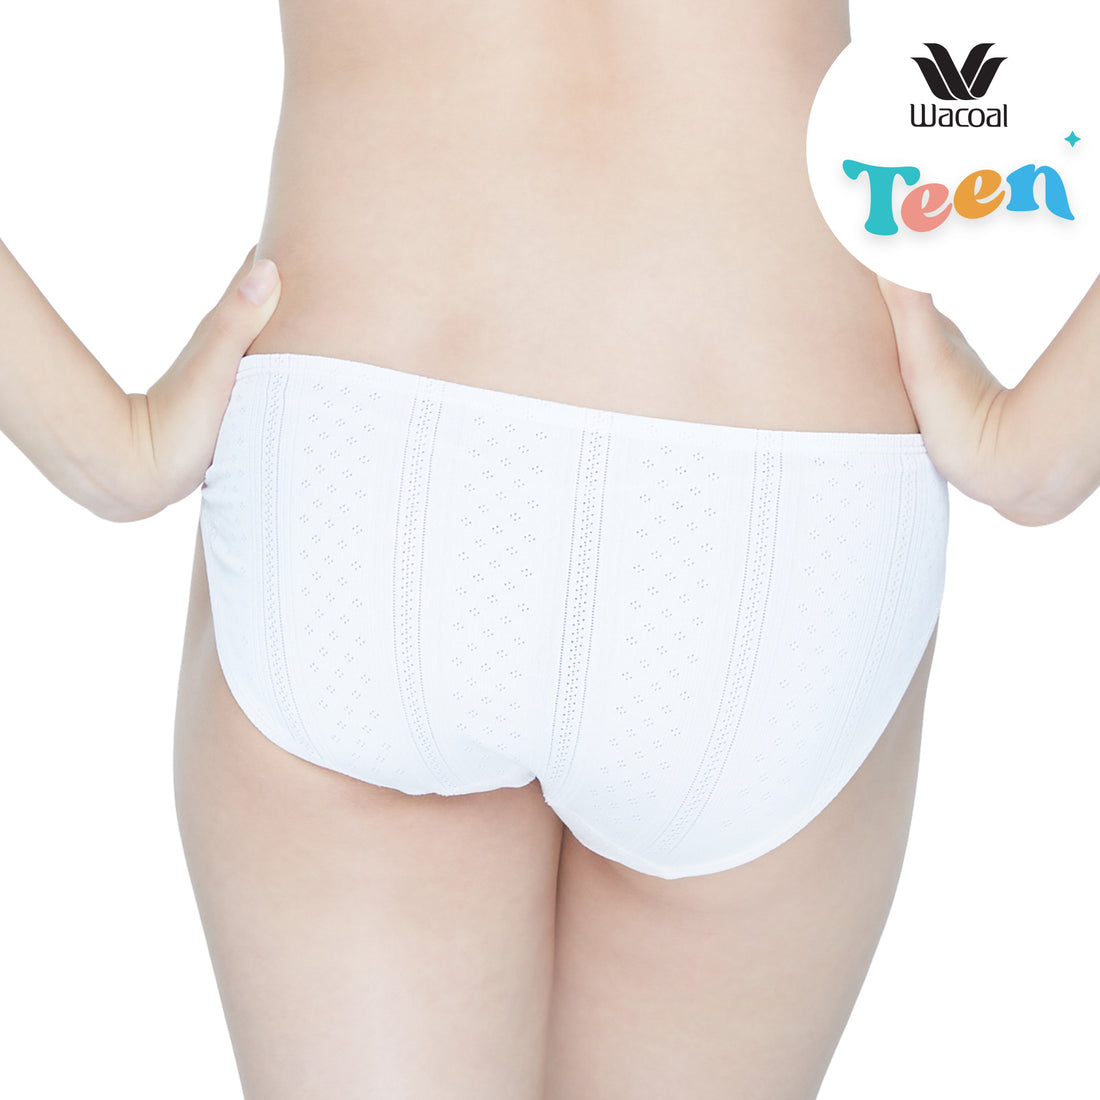 Wacoal Teen Bikini Panty Underwear for Teens Model MUT305 White (WH)